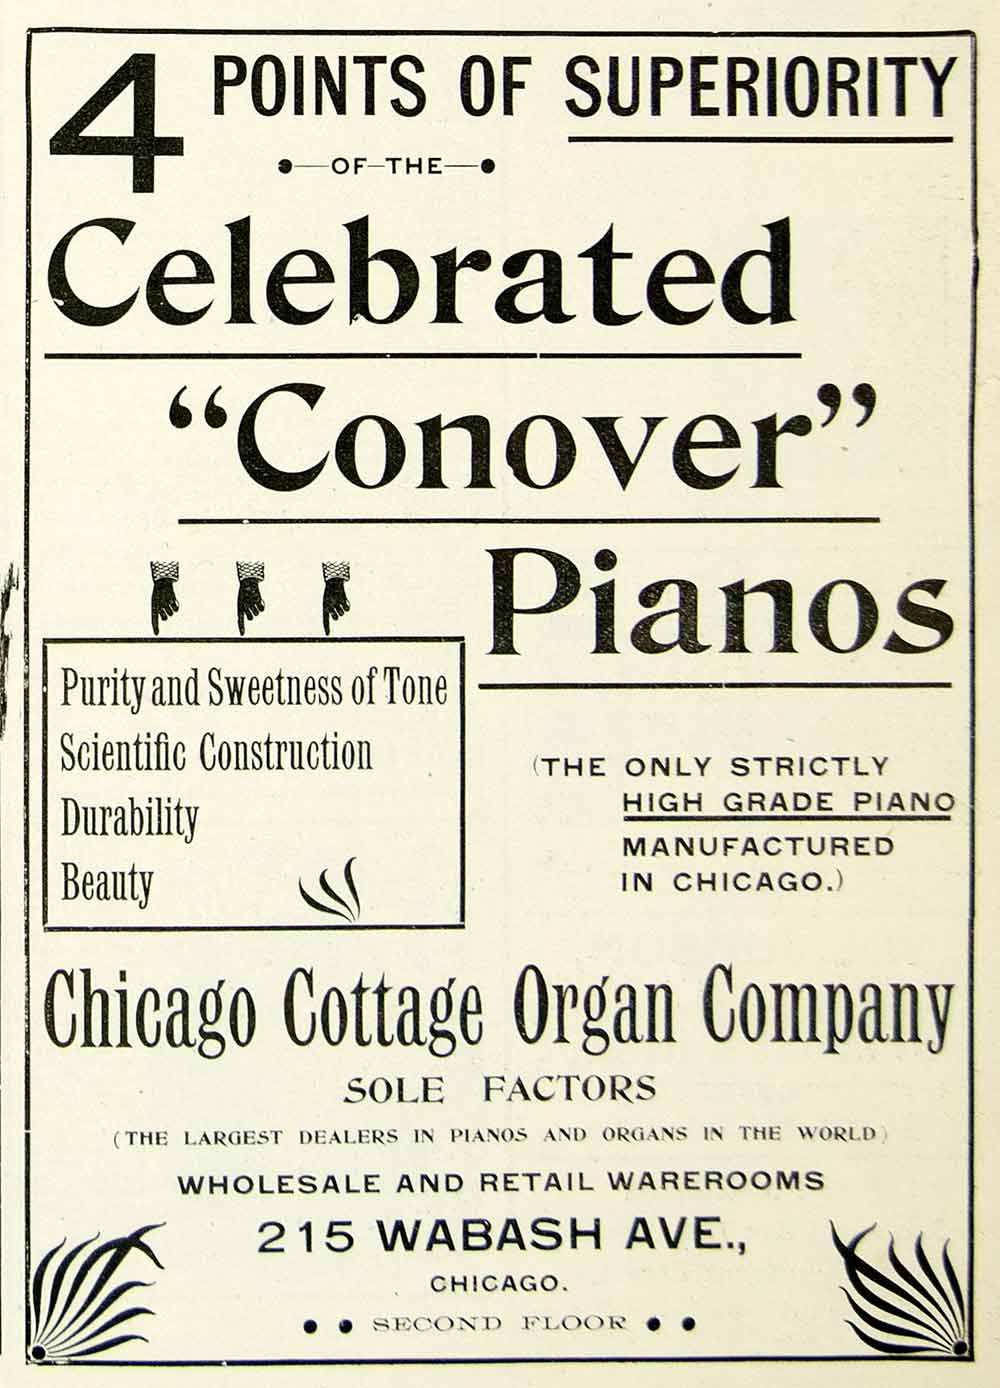 1893 Ad Conover Piano Chicago Cottage Organ 215 Wabash Avenue Musical WCE1